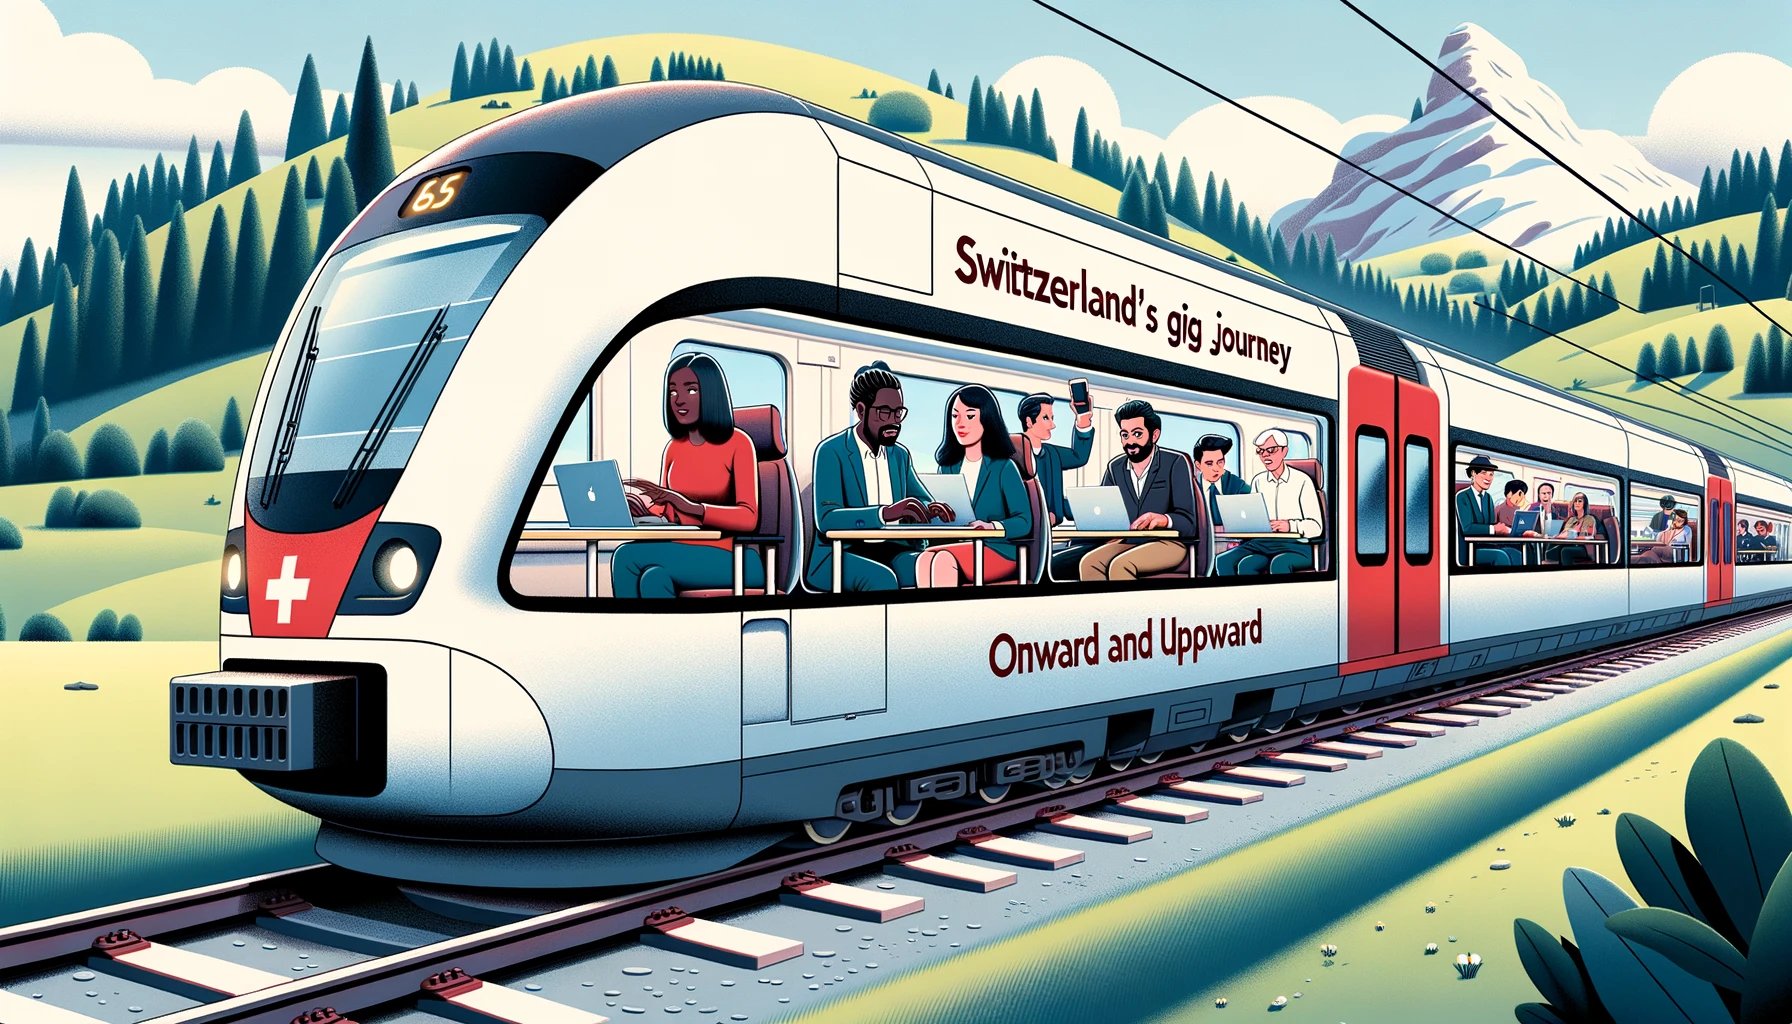 train in switzerland showing a Switzerland gig economy